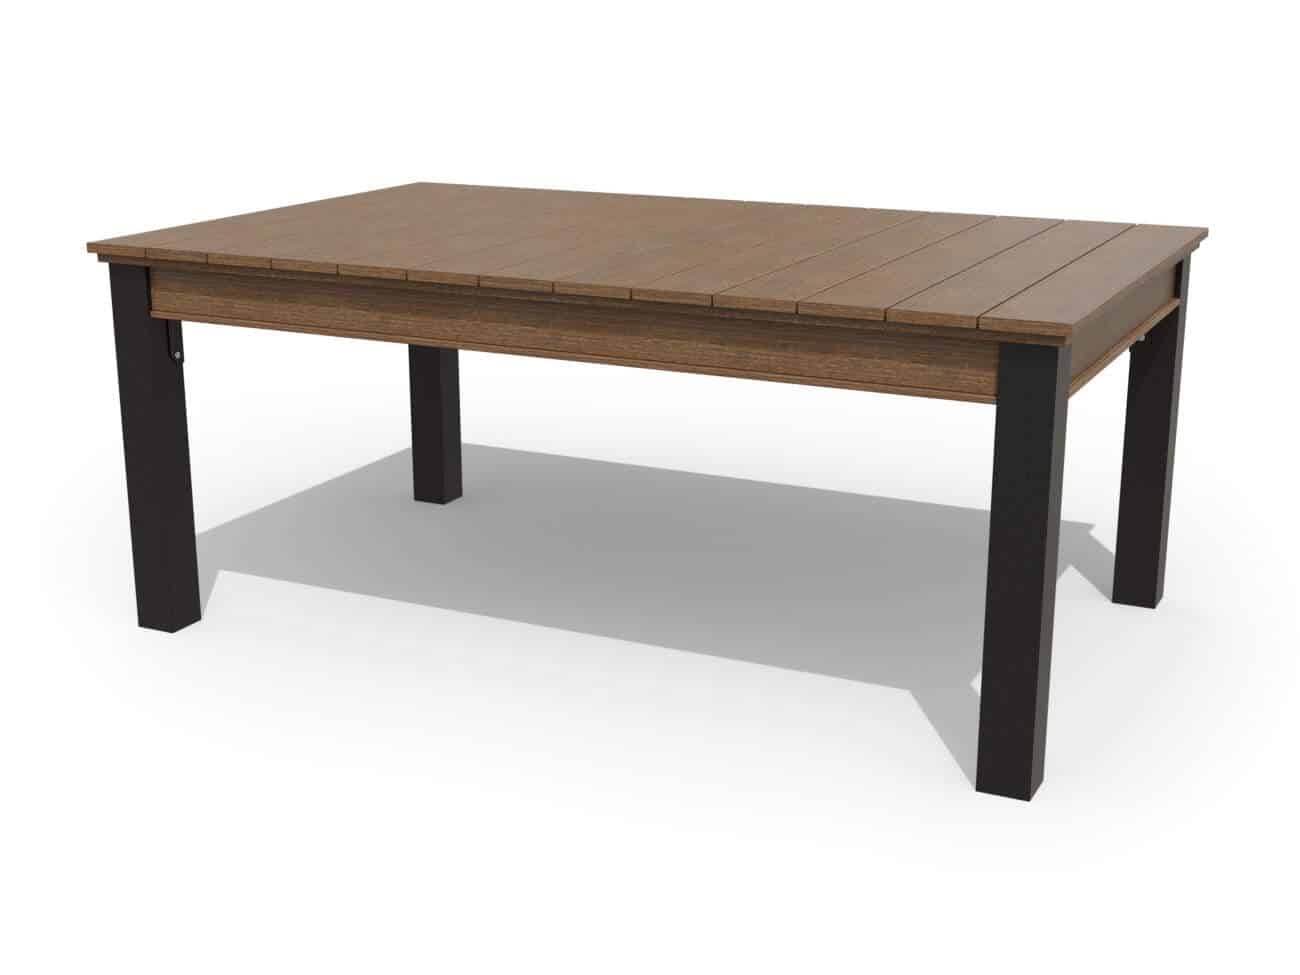 4x6 Coastal Table poly wood grain